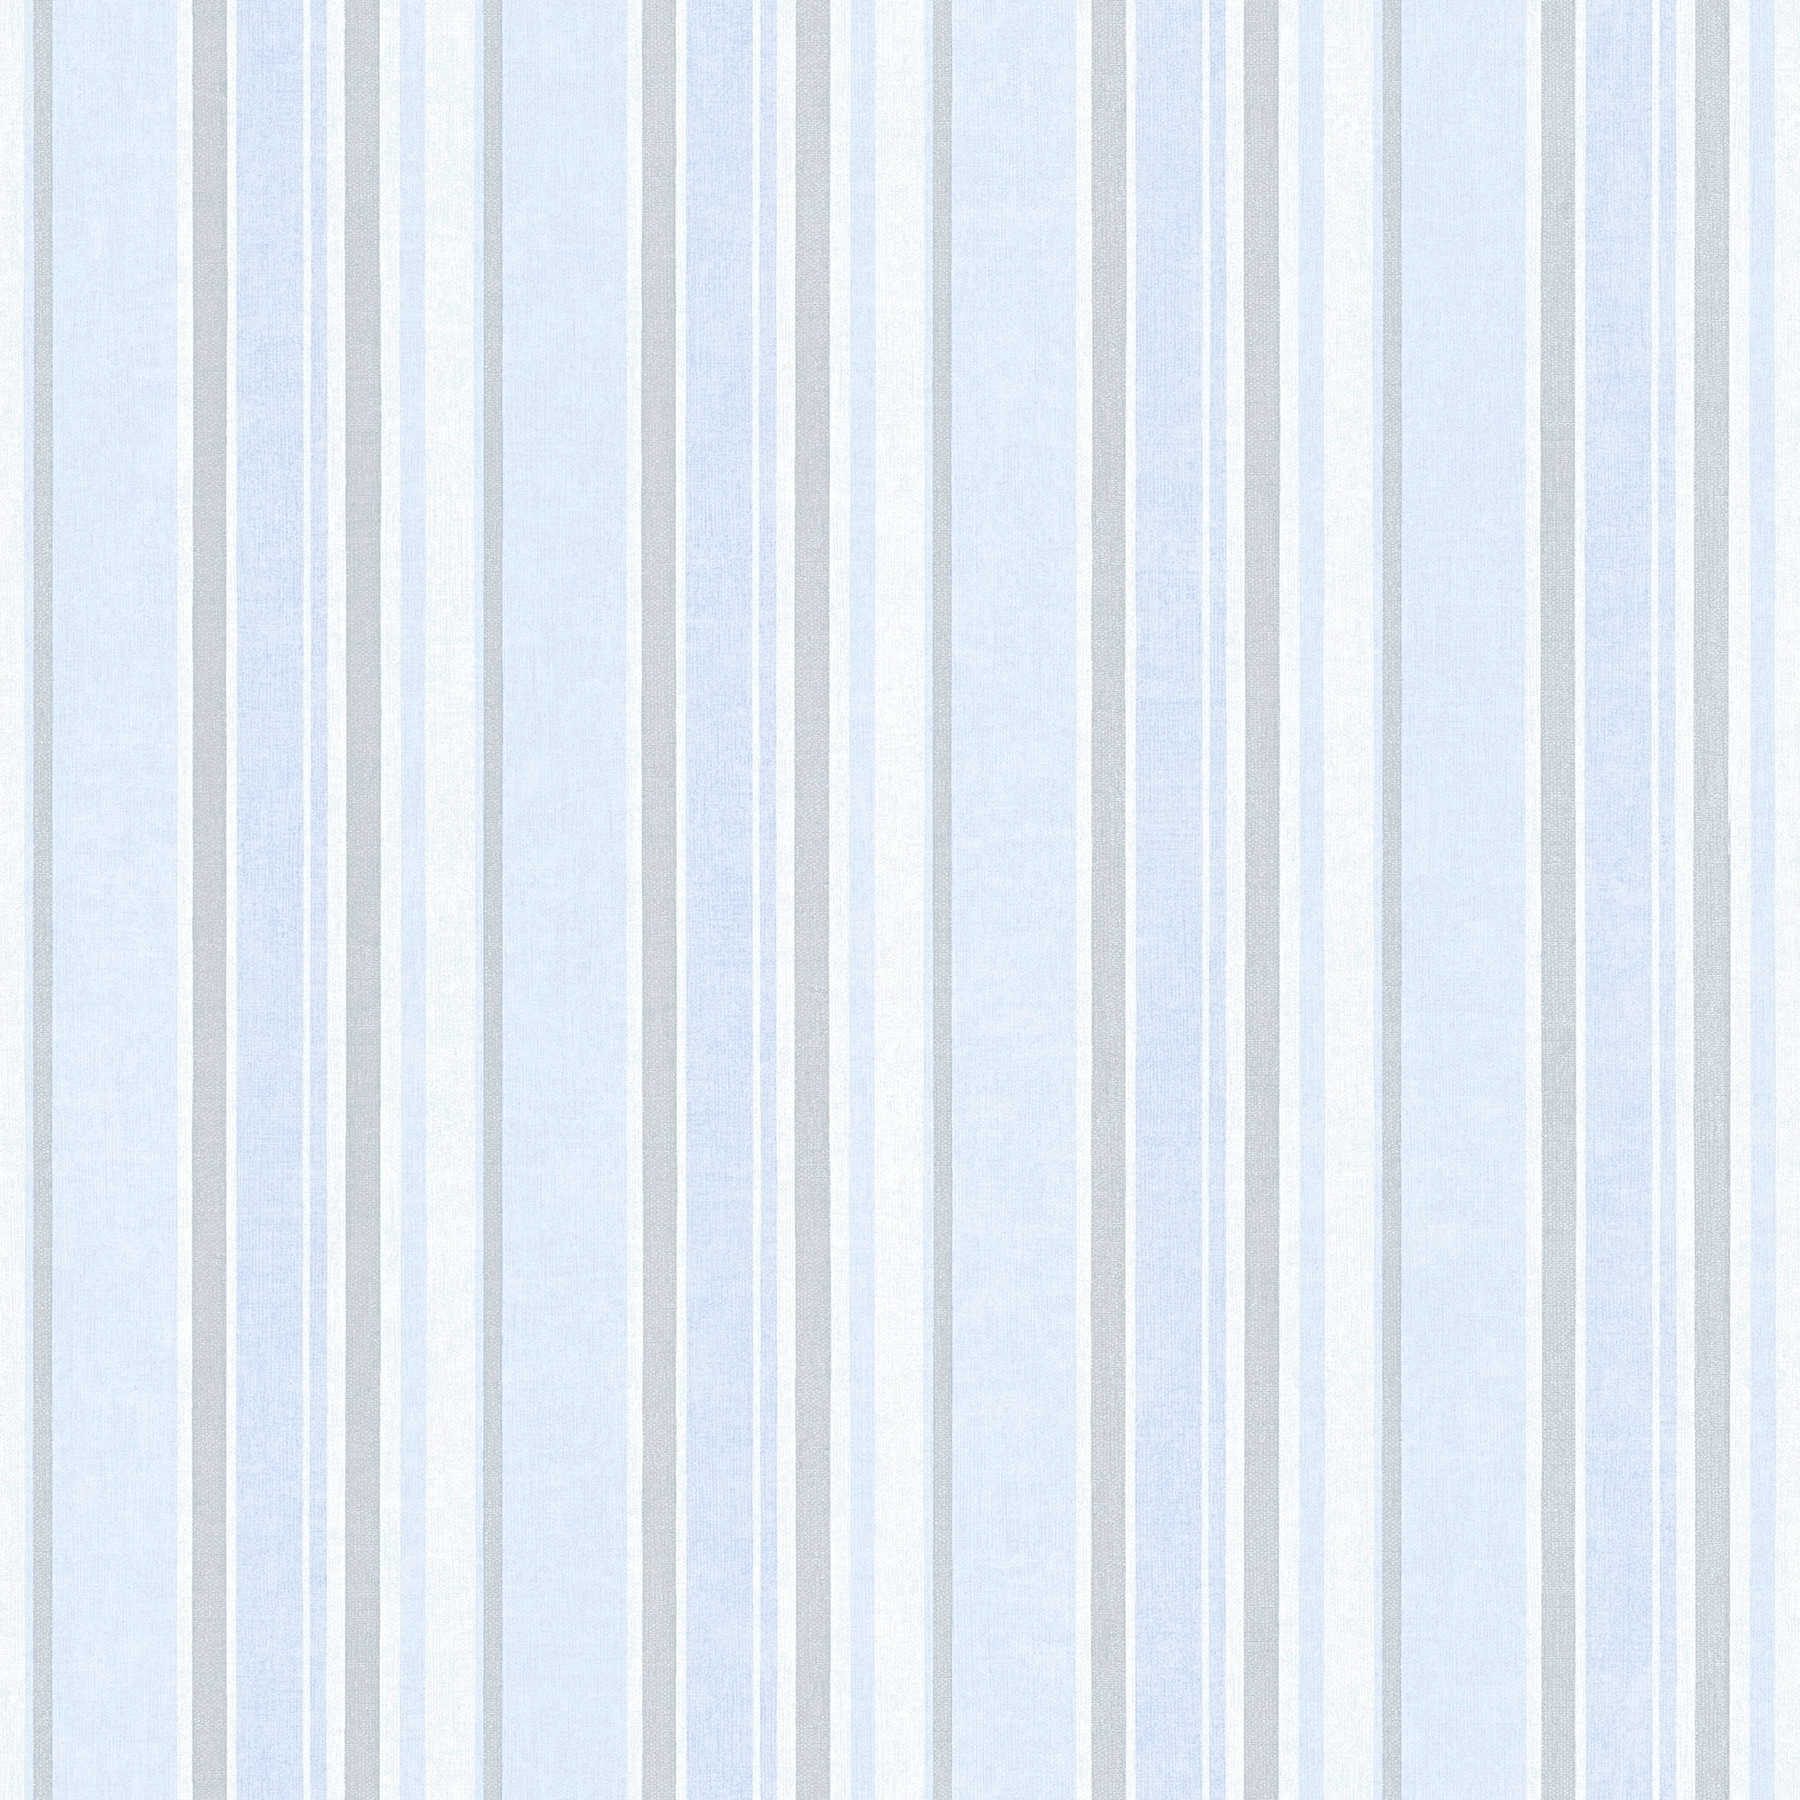         Stripes wallpaper for Nursery, boys - blue, grey, white
    